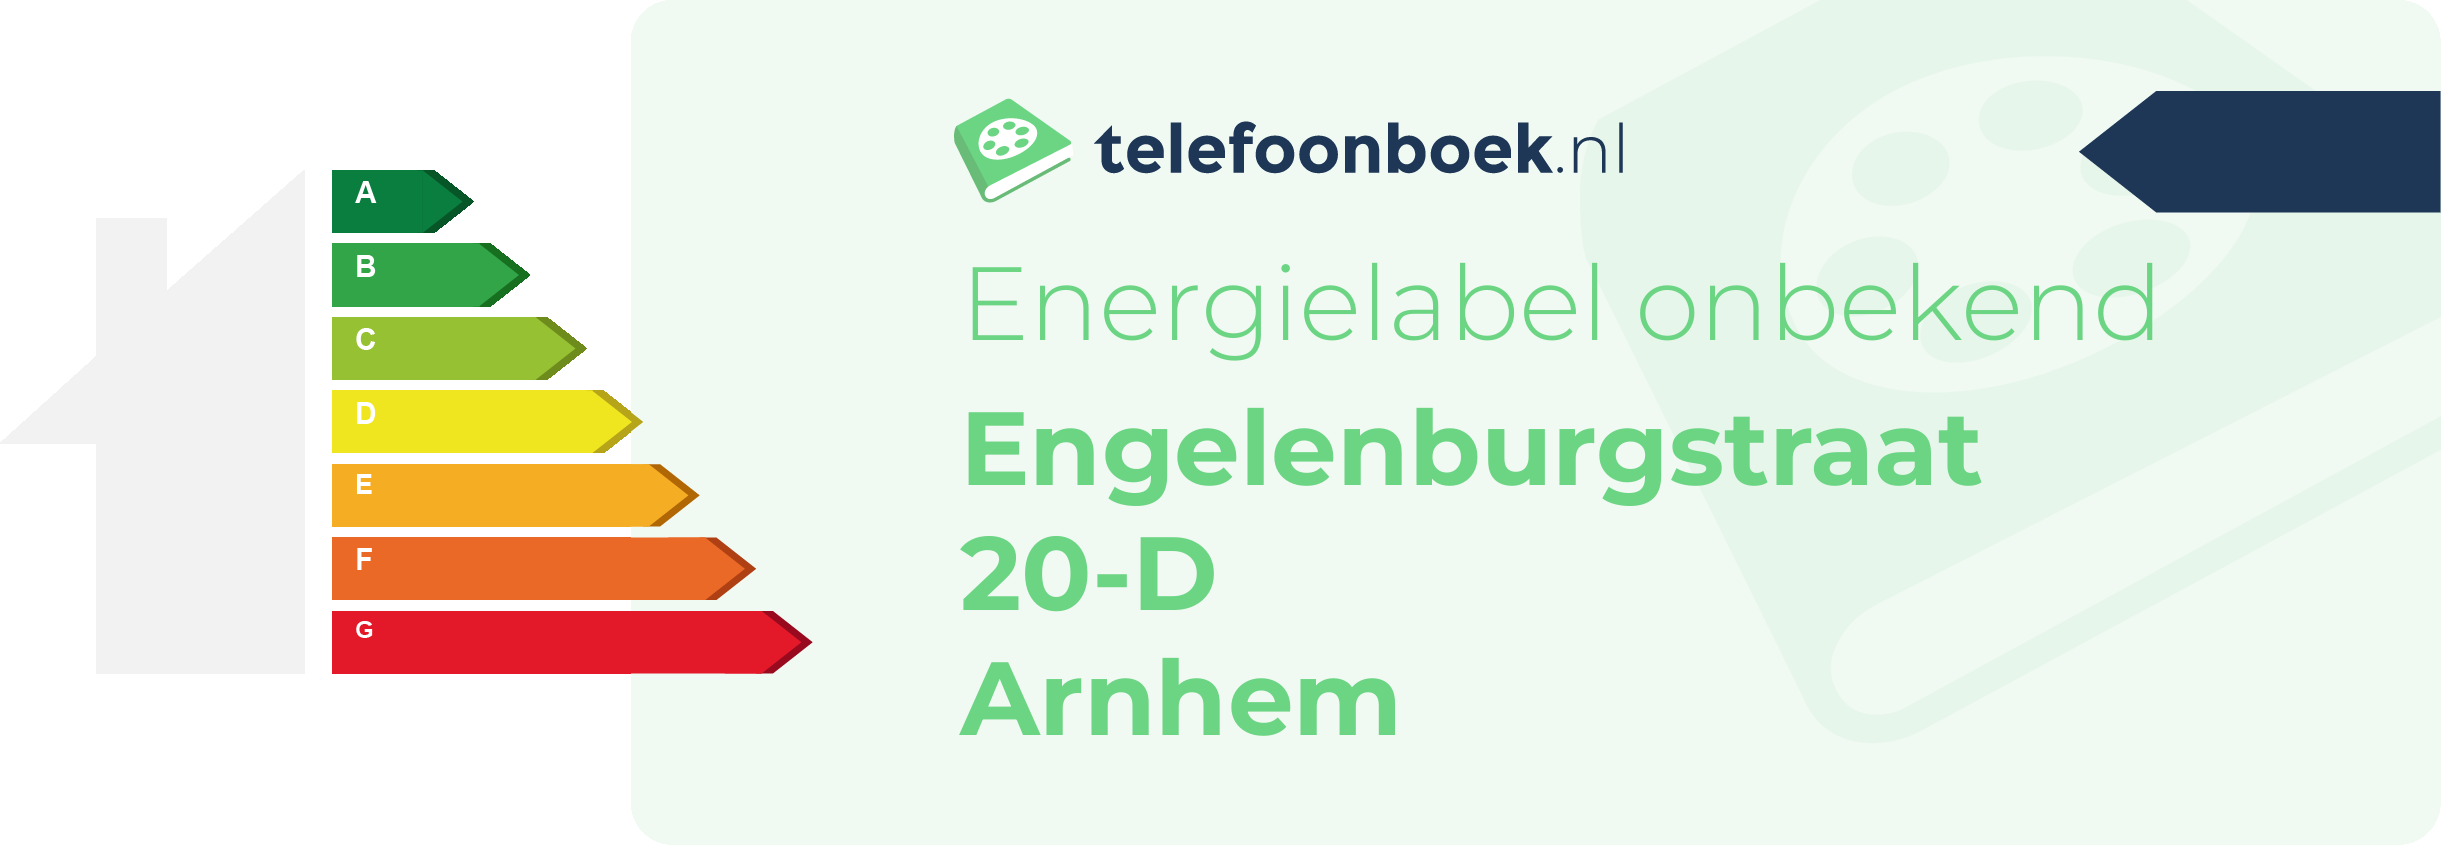 Energielabel Engelenburgstraat 20-D Arnhem